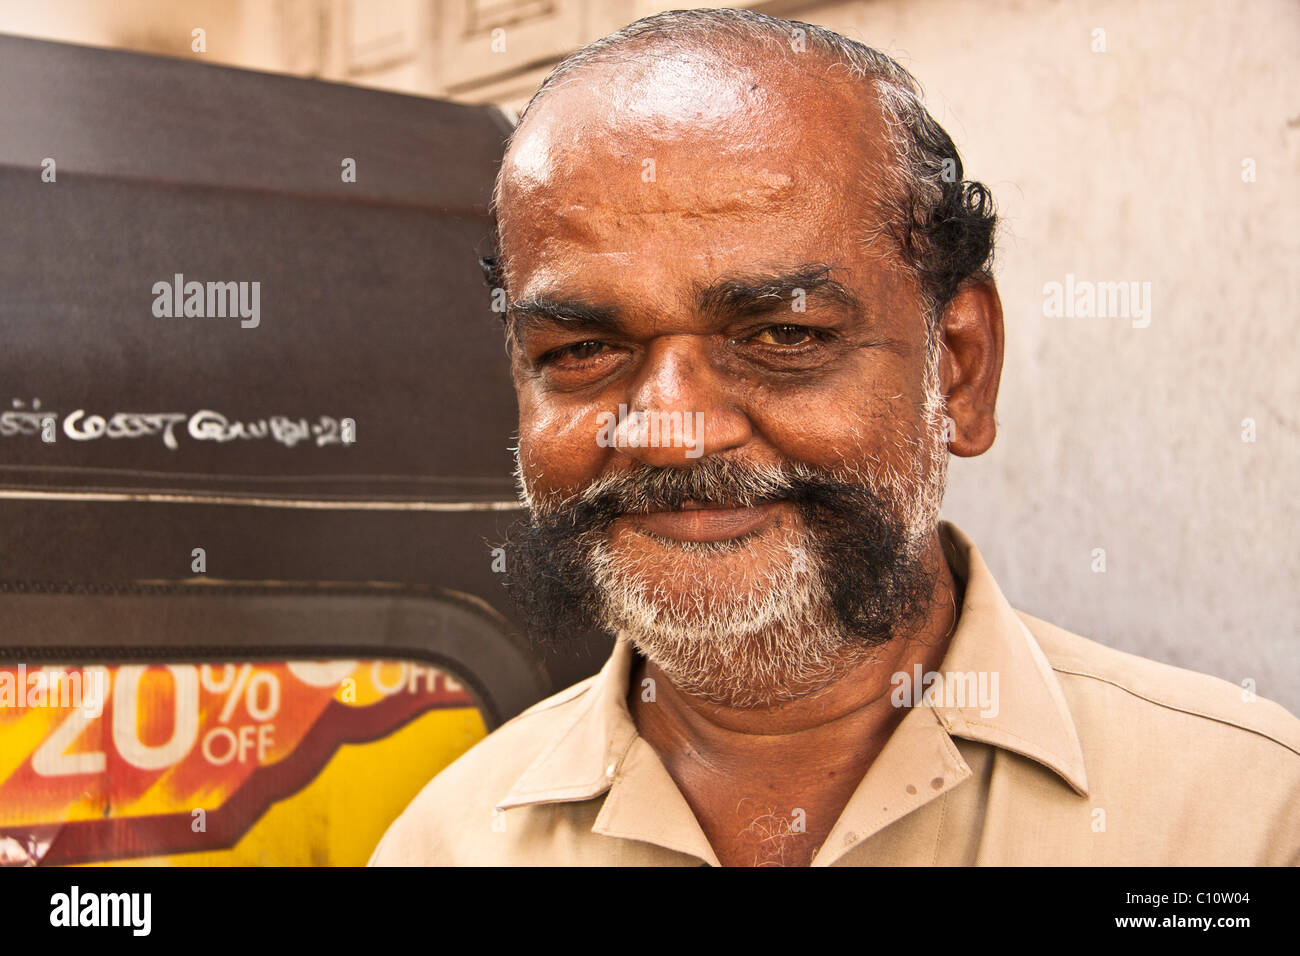 Auto rickshaw driver with black mustache Stock Photo